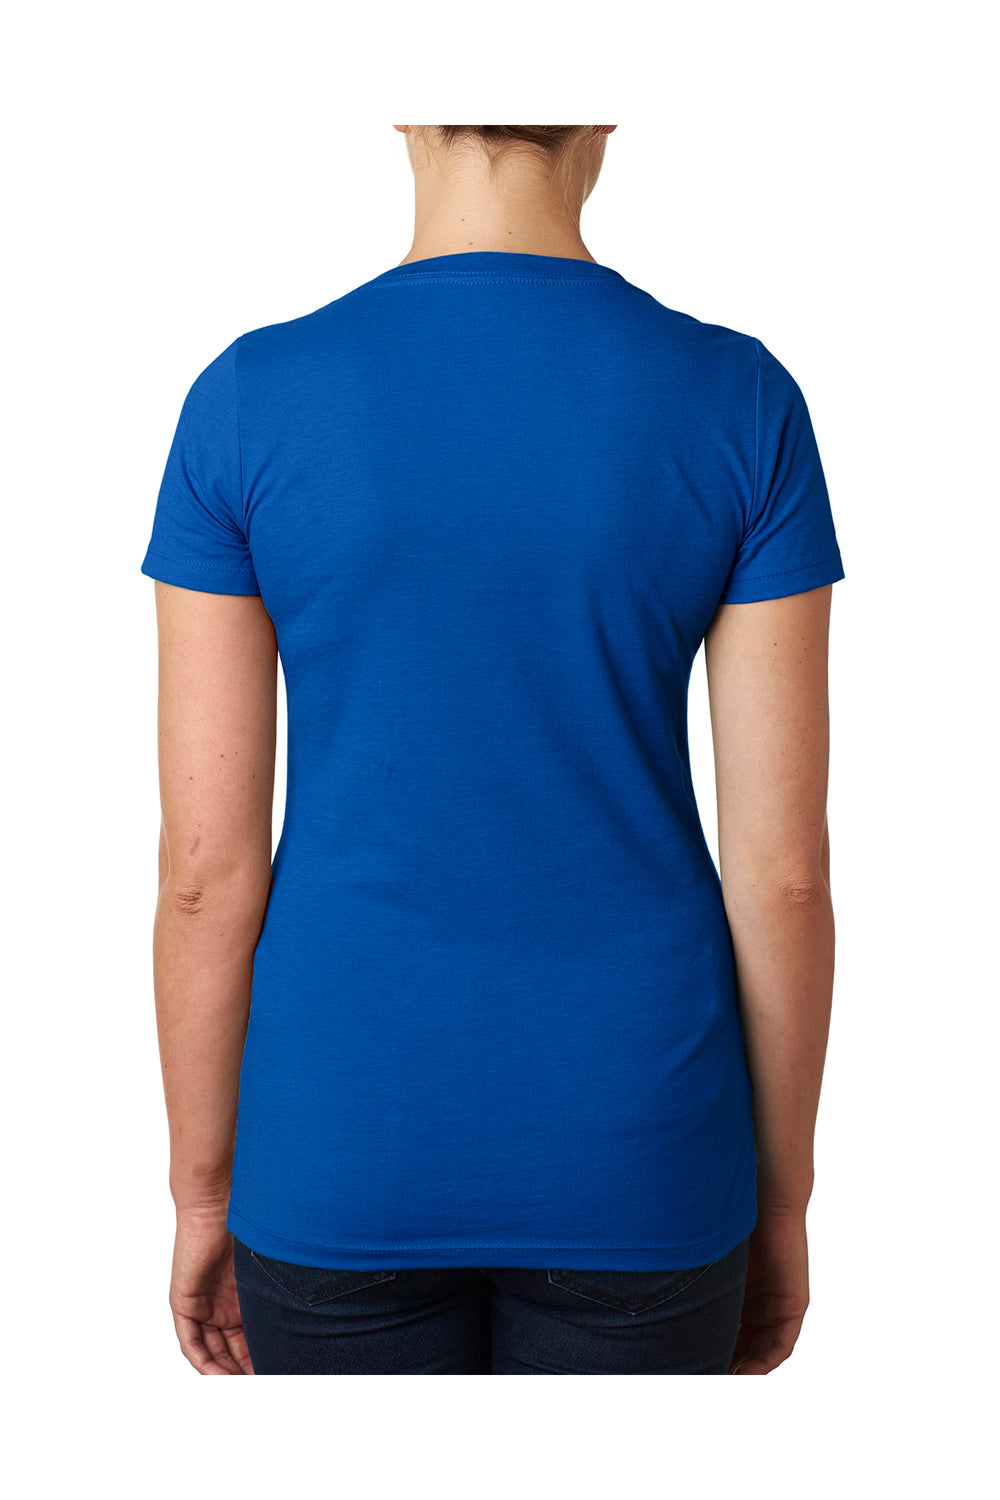 Next Level 6640 Womens CVC Jersey Short Sleeve V-Neck T-Shirt Royal Blue Back